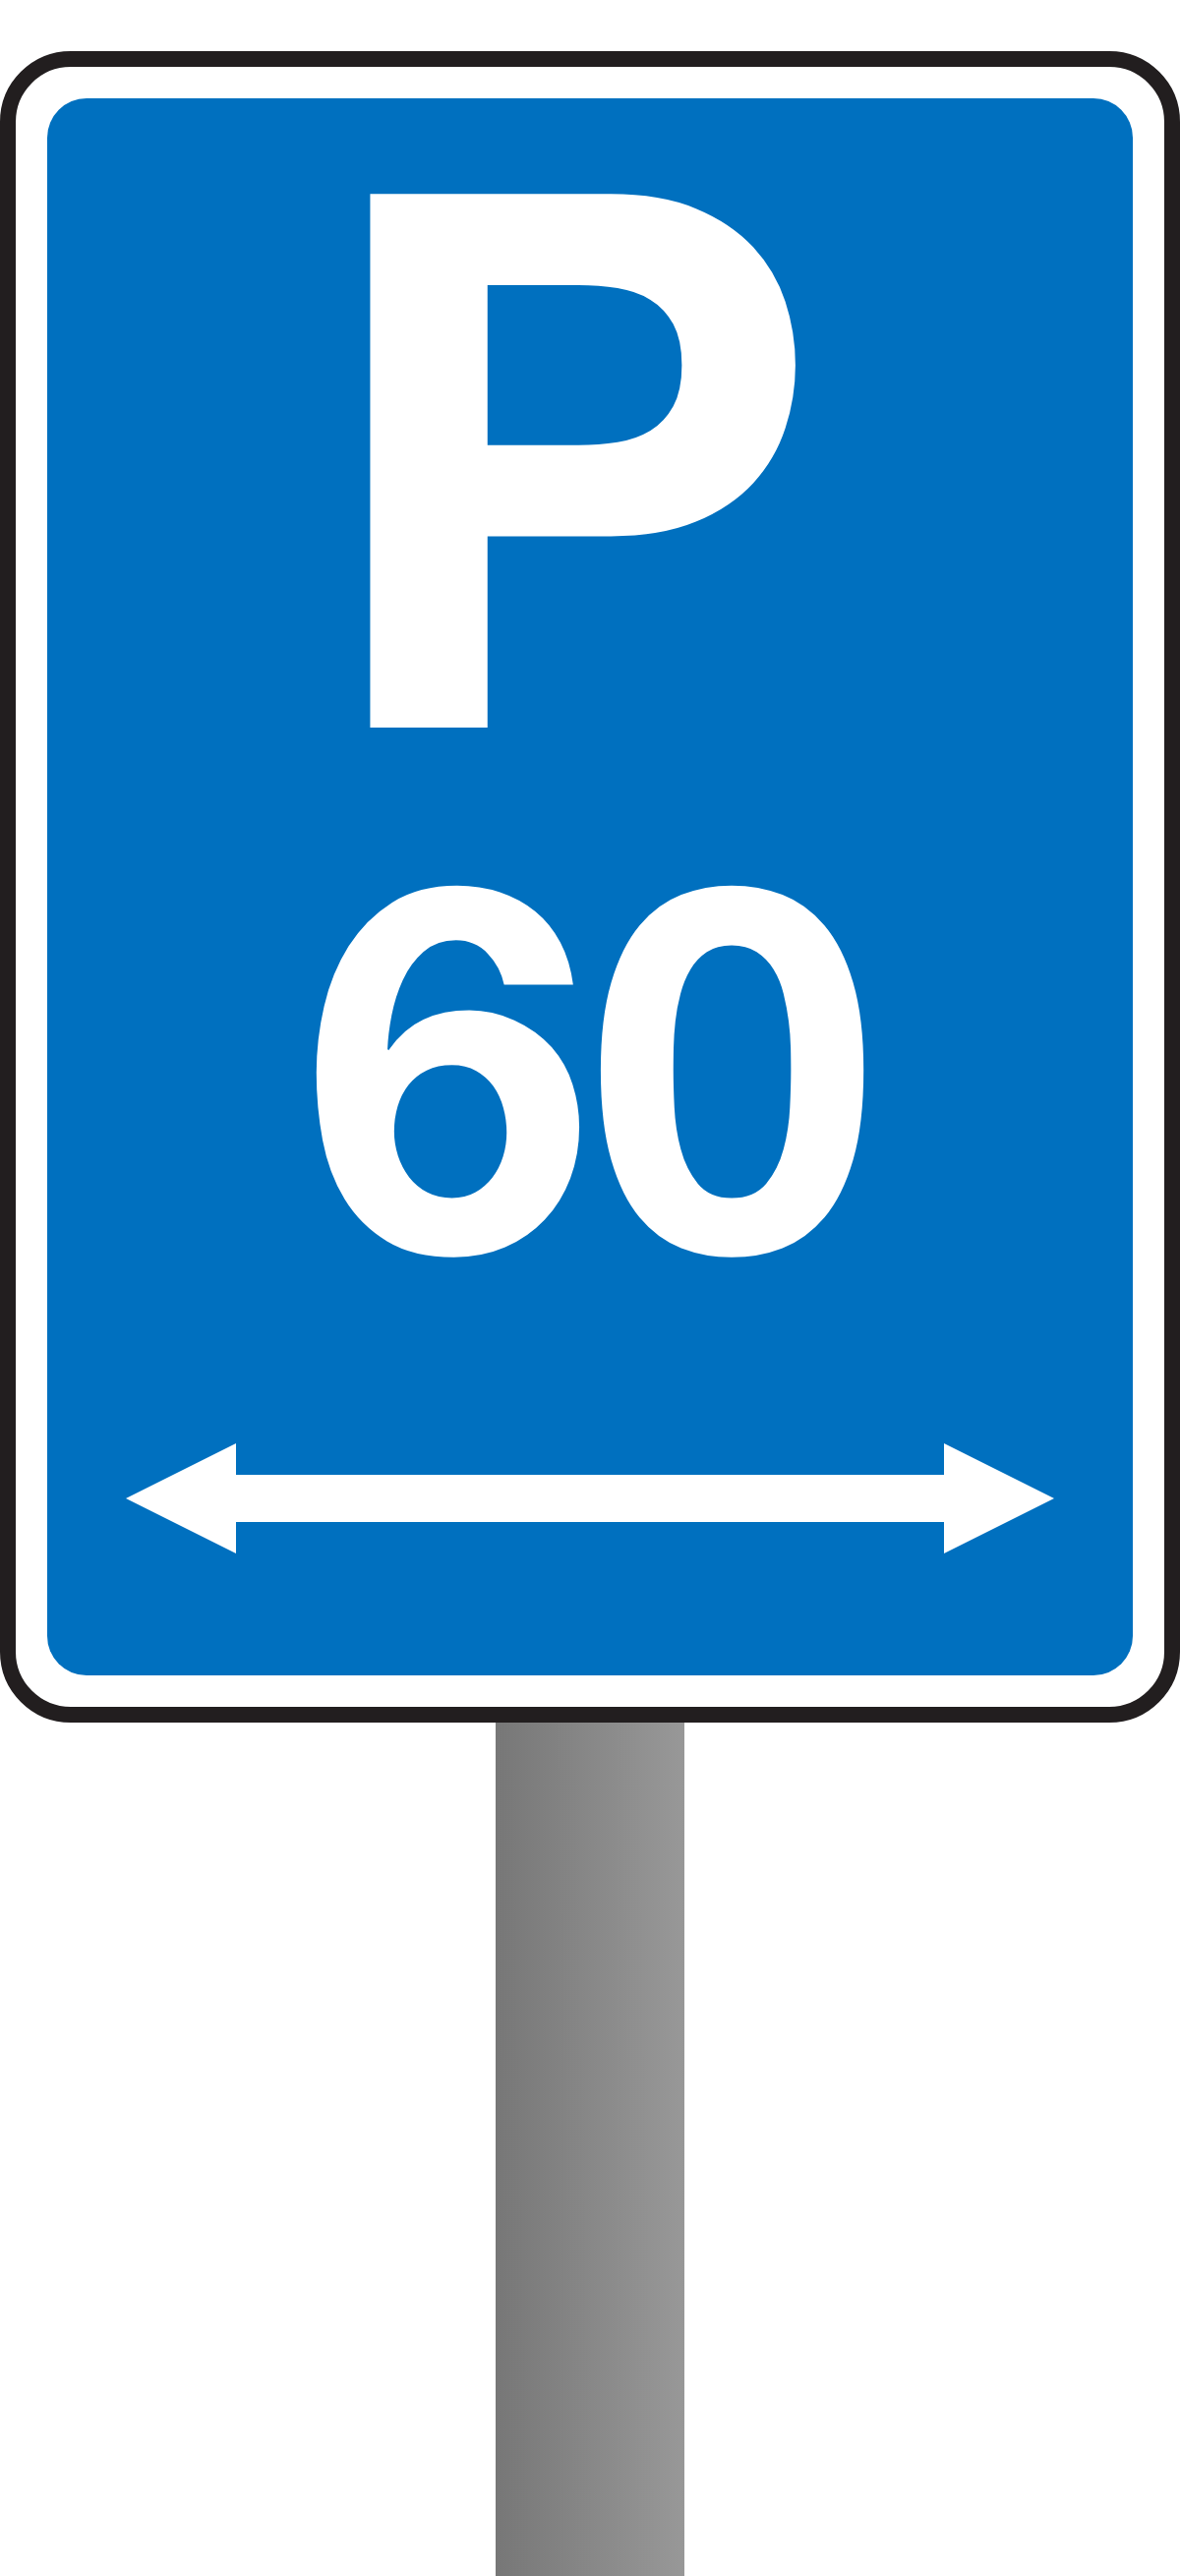 P60 Parking Sign